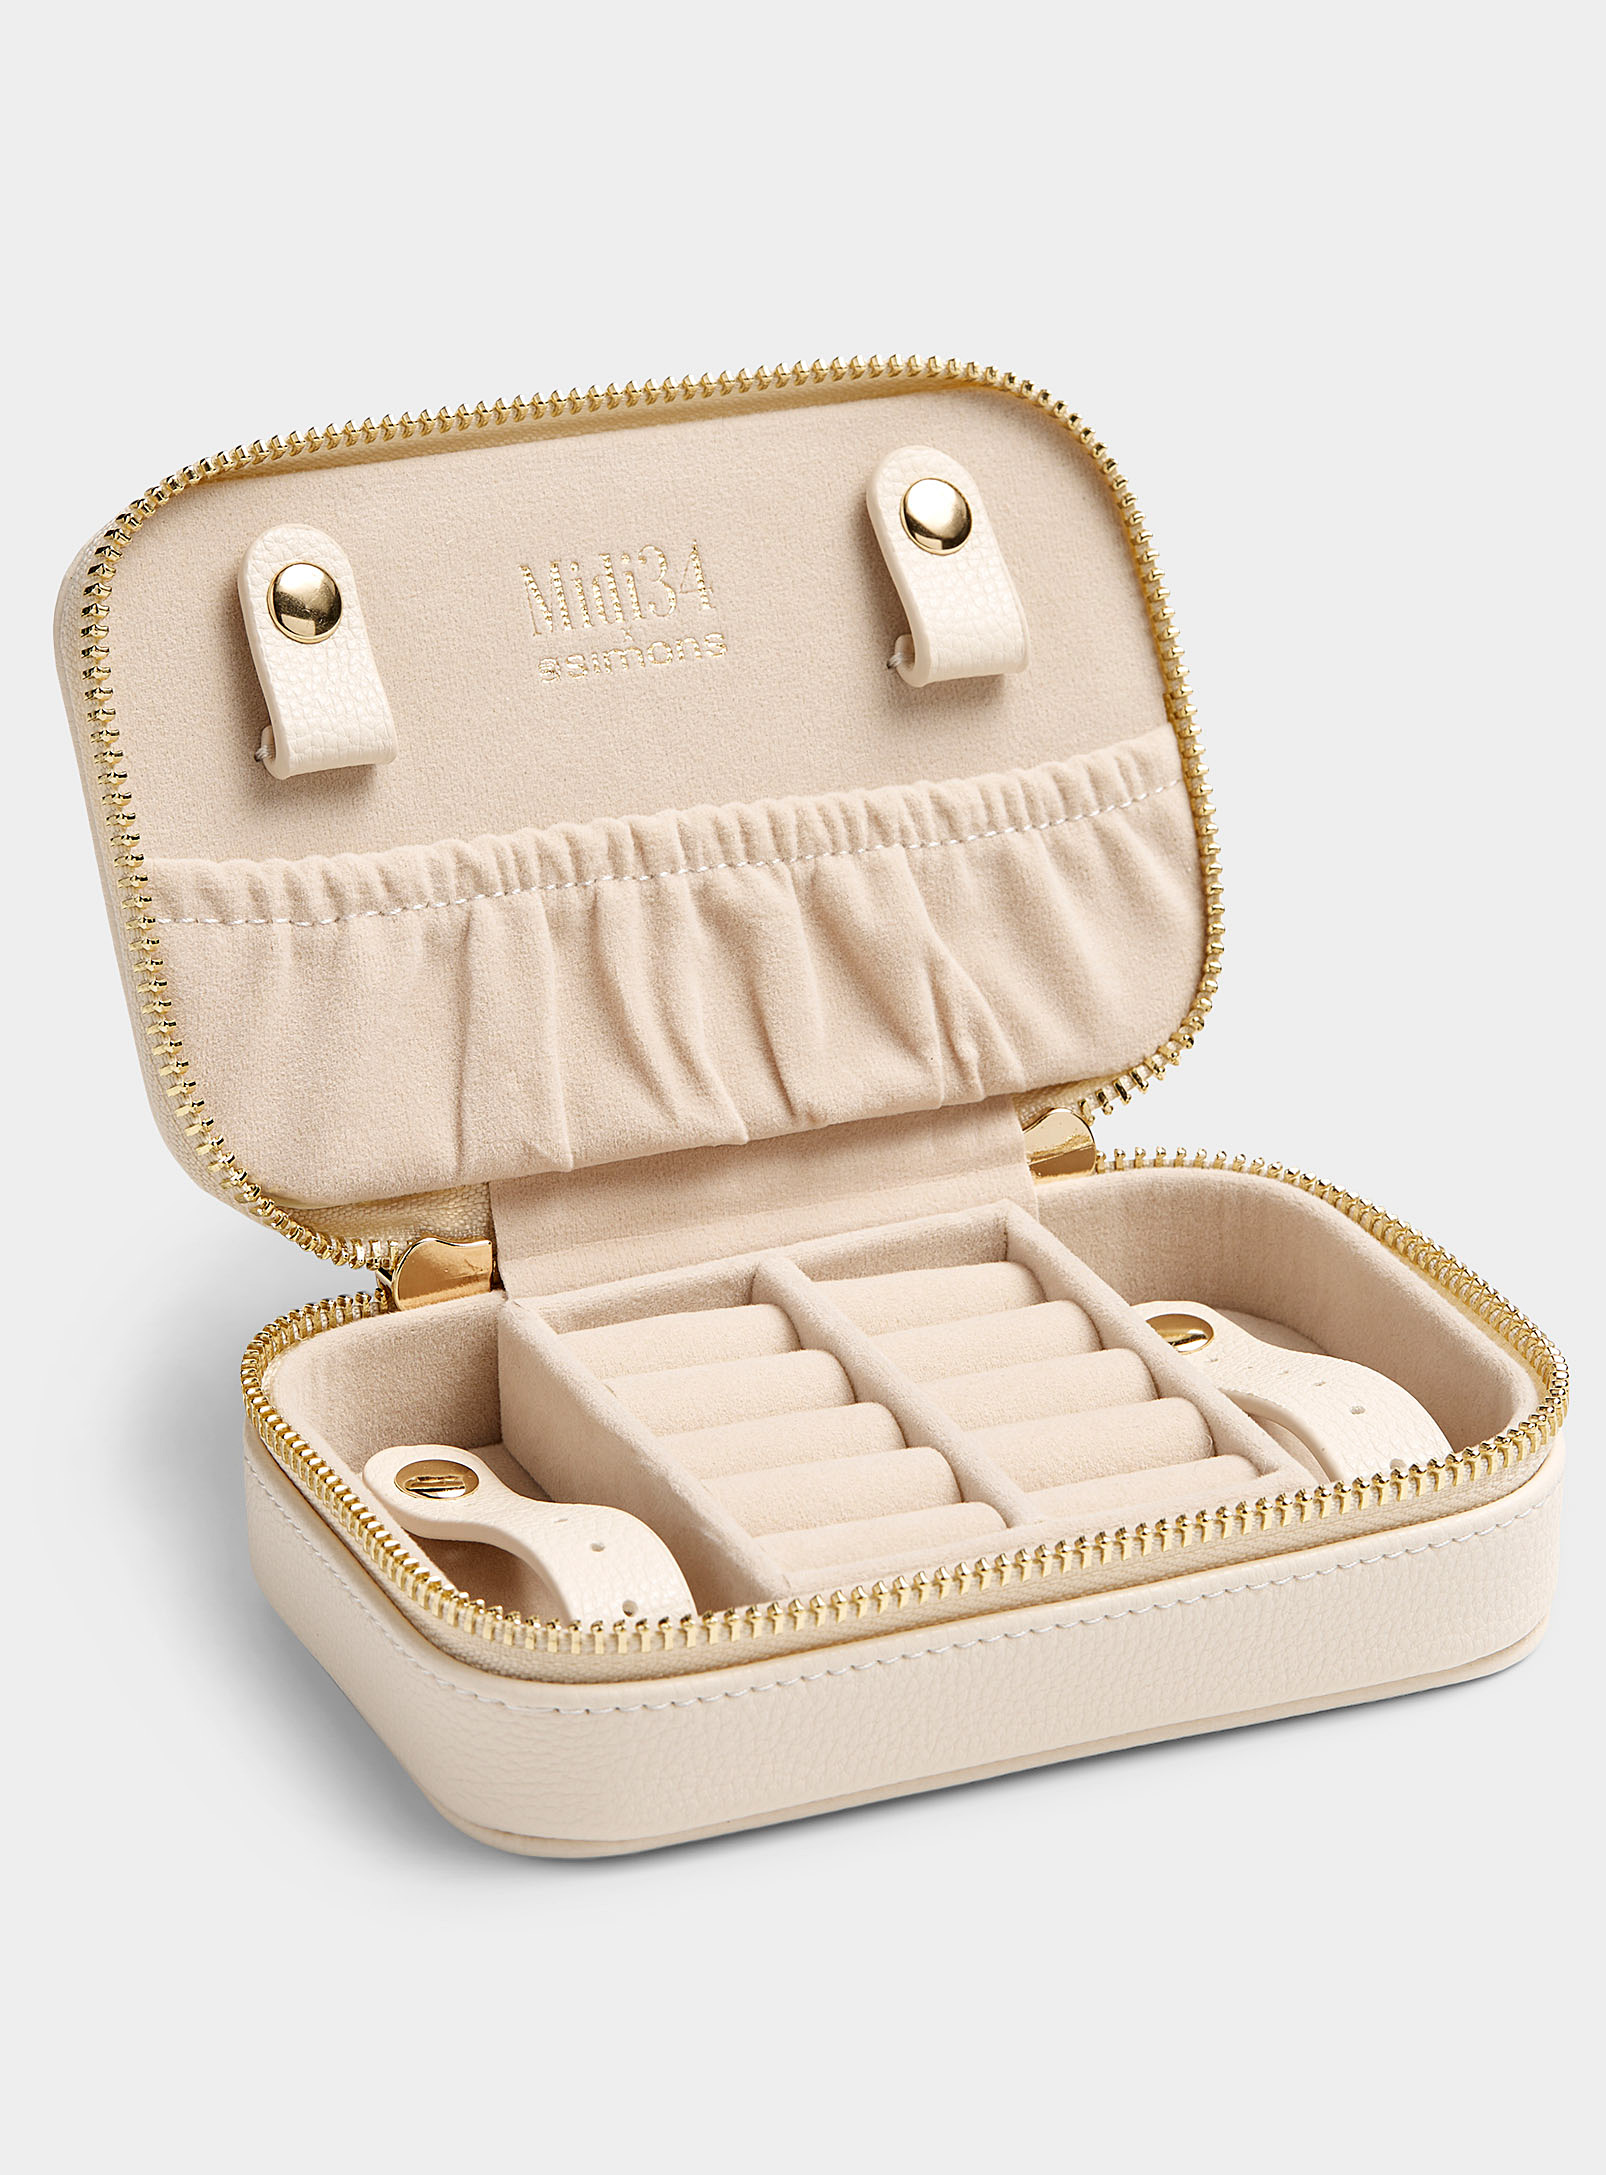 Midi34 x Simons - Women's Travel jewellery box